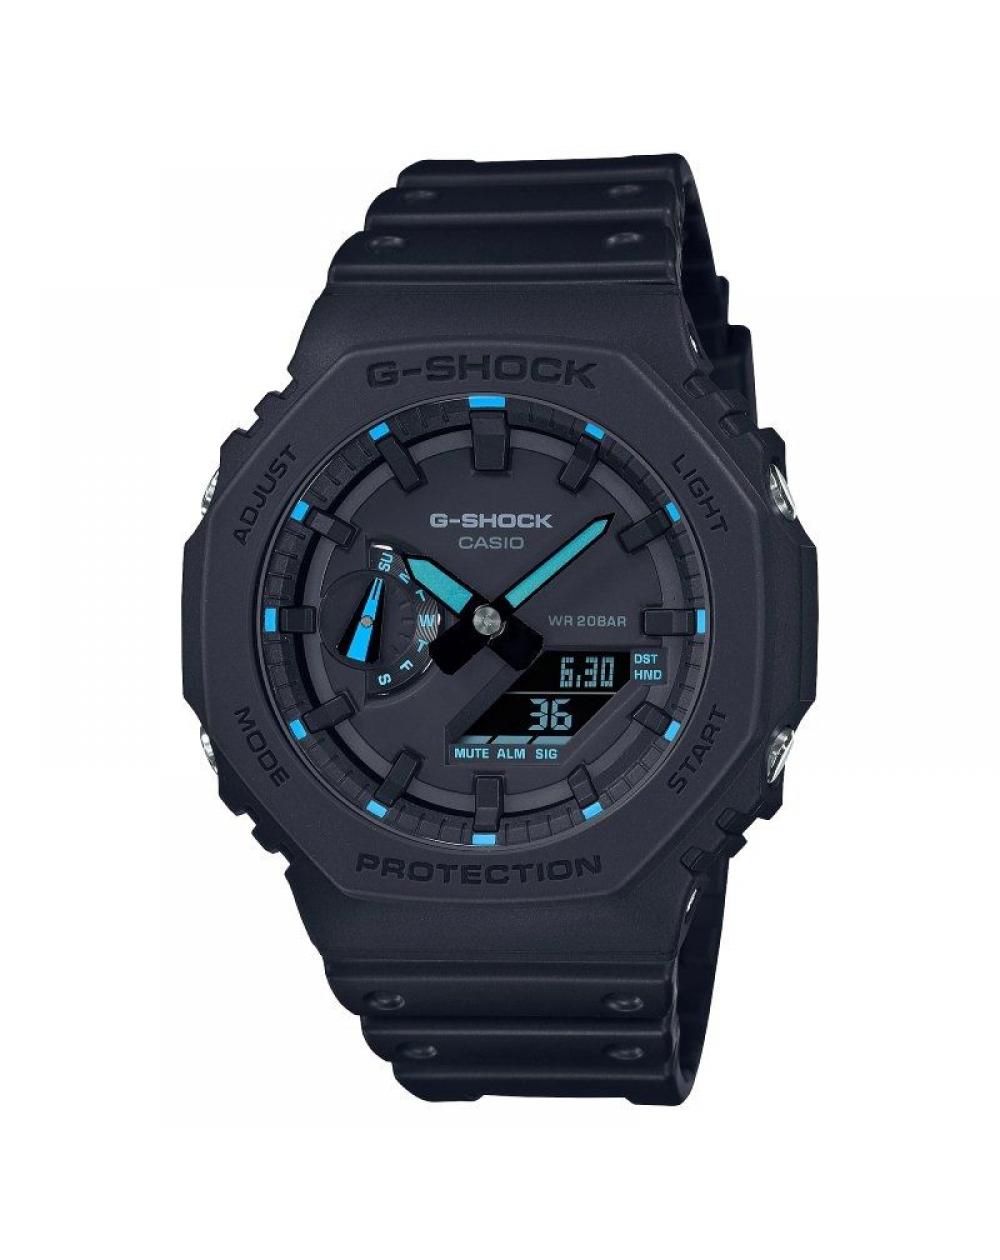 Reloj Analógico Digital Casio G-Shock Trend GA-2100-1A2ER/ 49mm/ Negro y Azul - Imagen 1